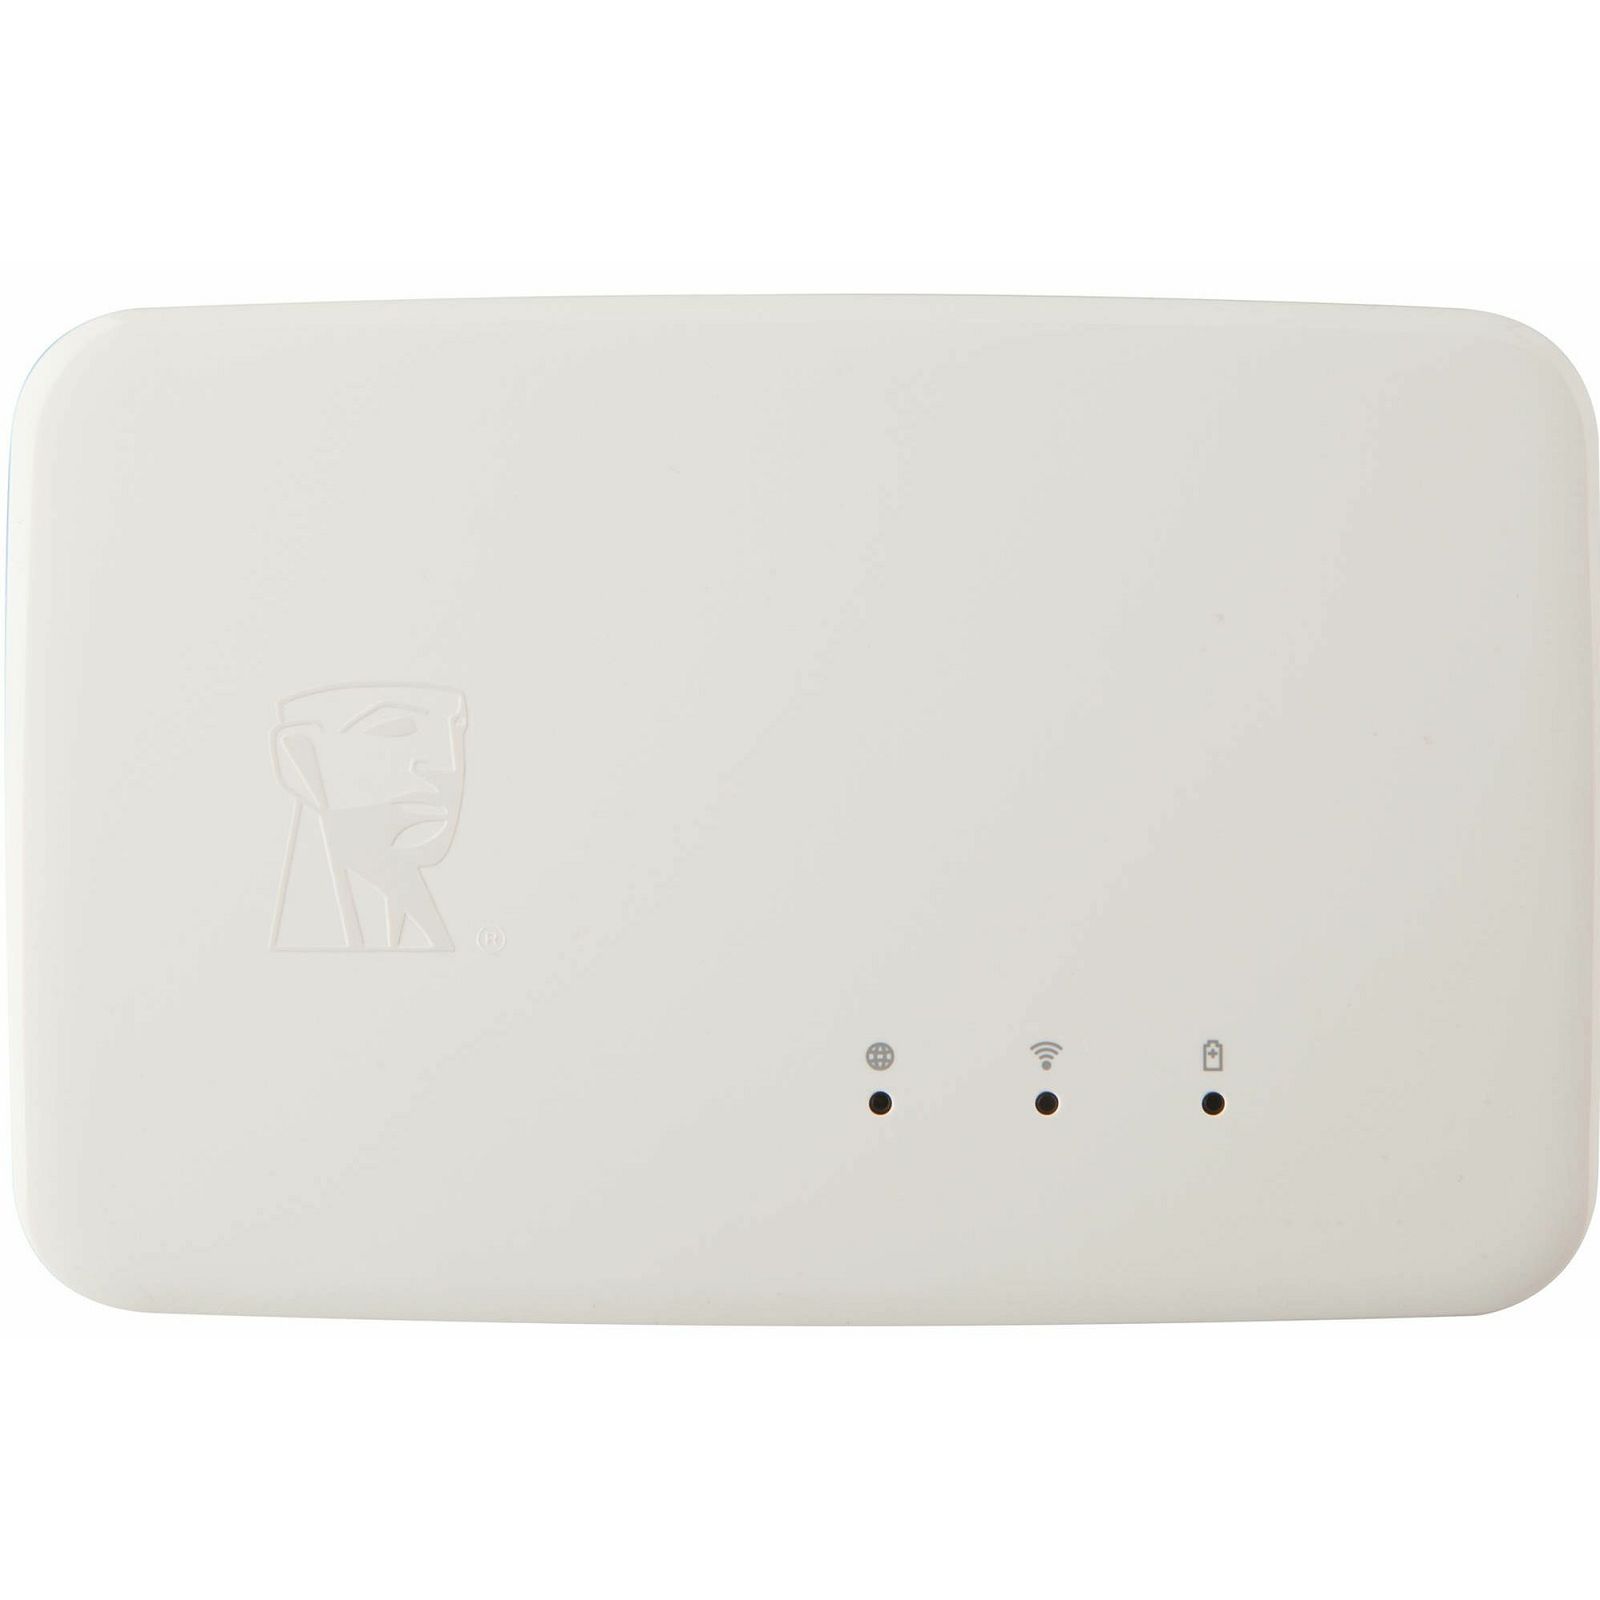 Kingston MobileLite Wireless G3 (White) bežićni čitač kartica, punjač, MLWG3